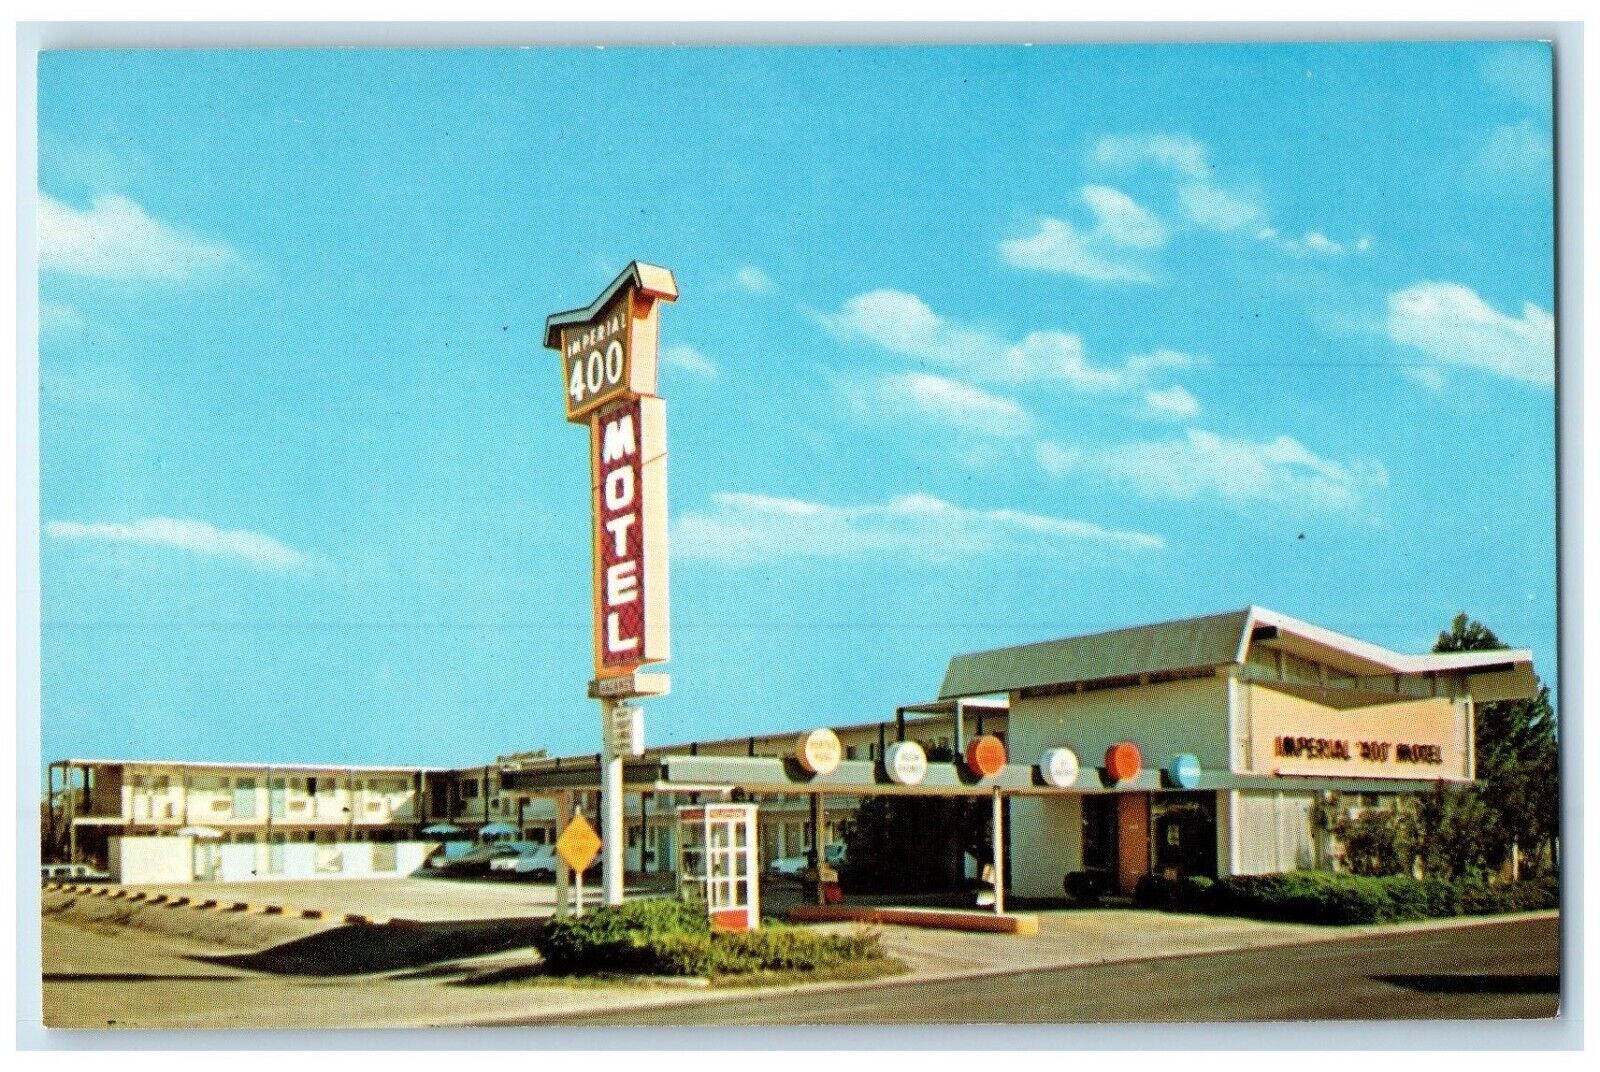 c1960 Imperial 400 Motel South Street Exterior Building McAllen Texas Postcard